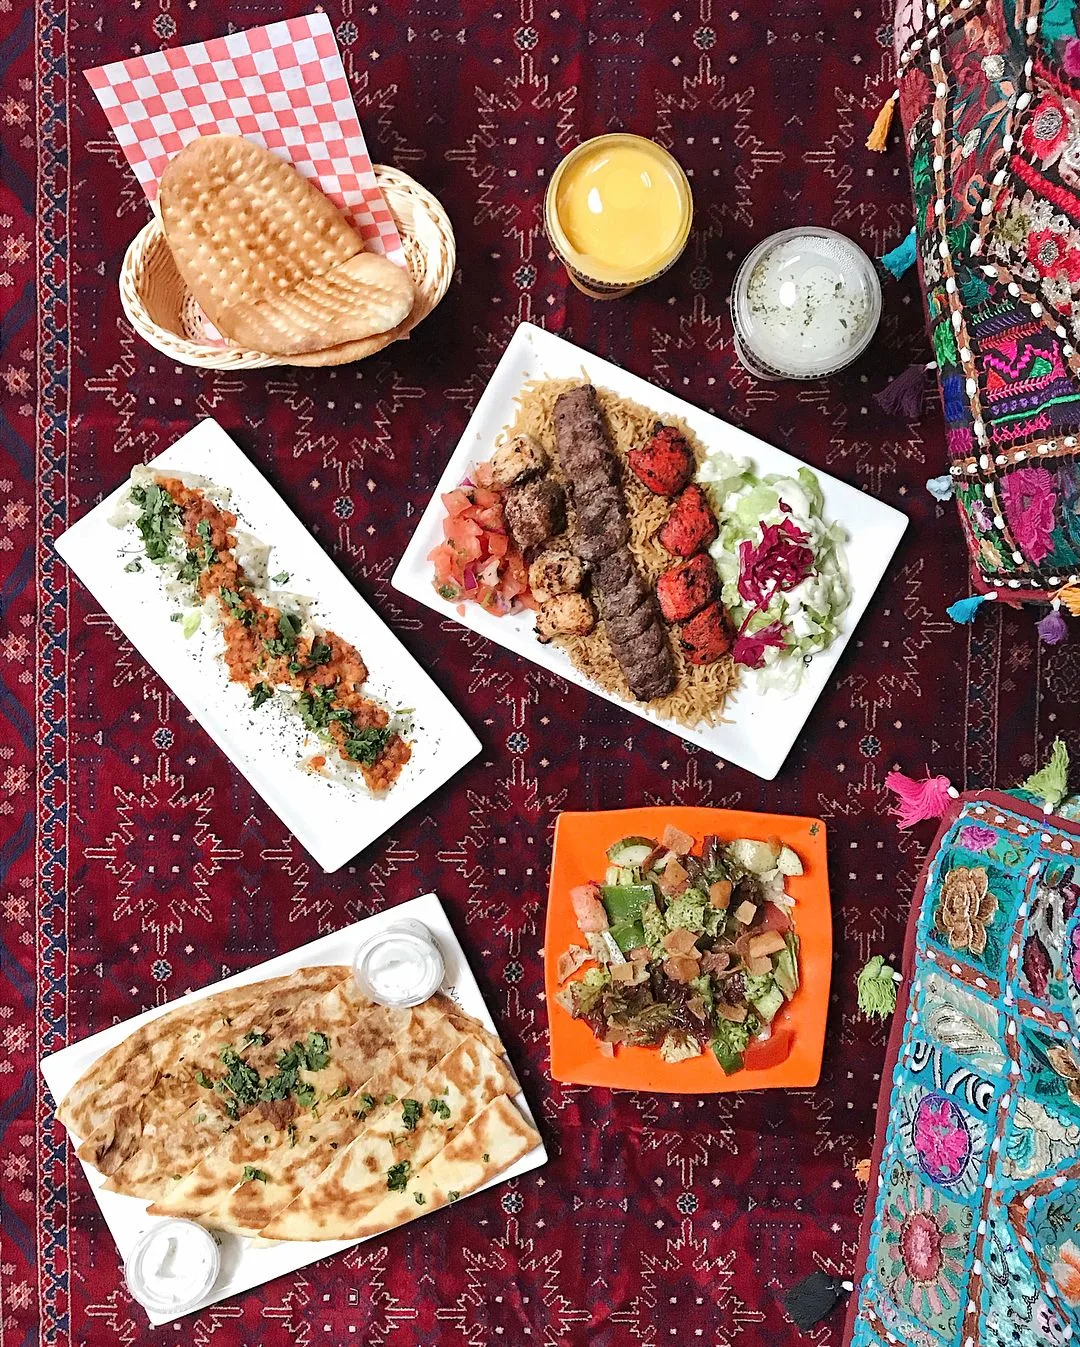 Naan & Kabob, one of the best Afghan restaurants in Toronto